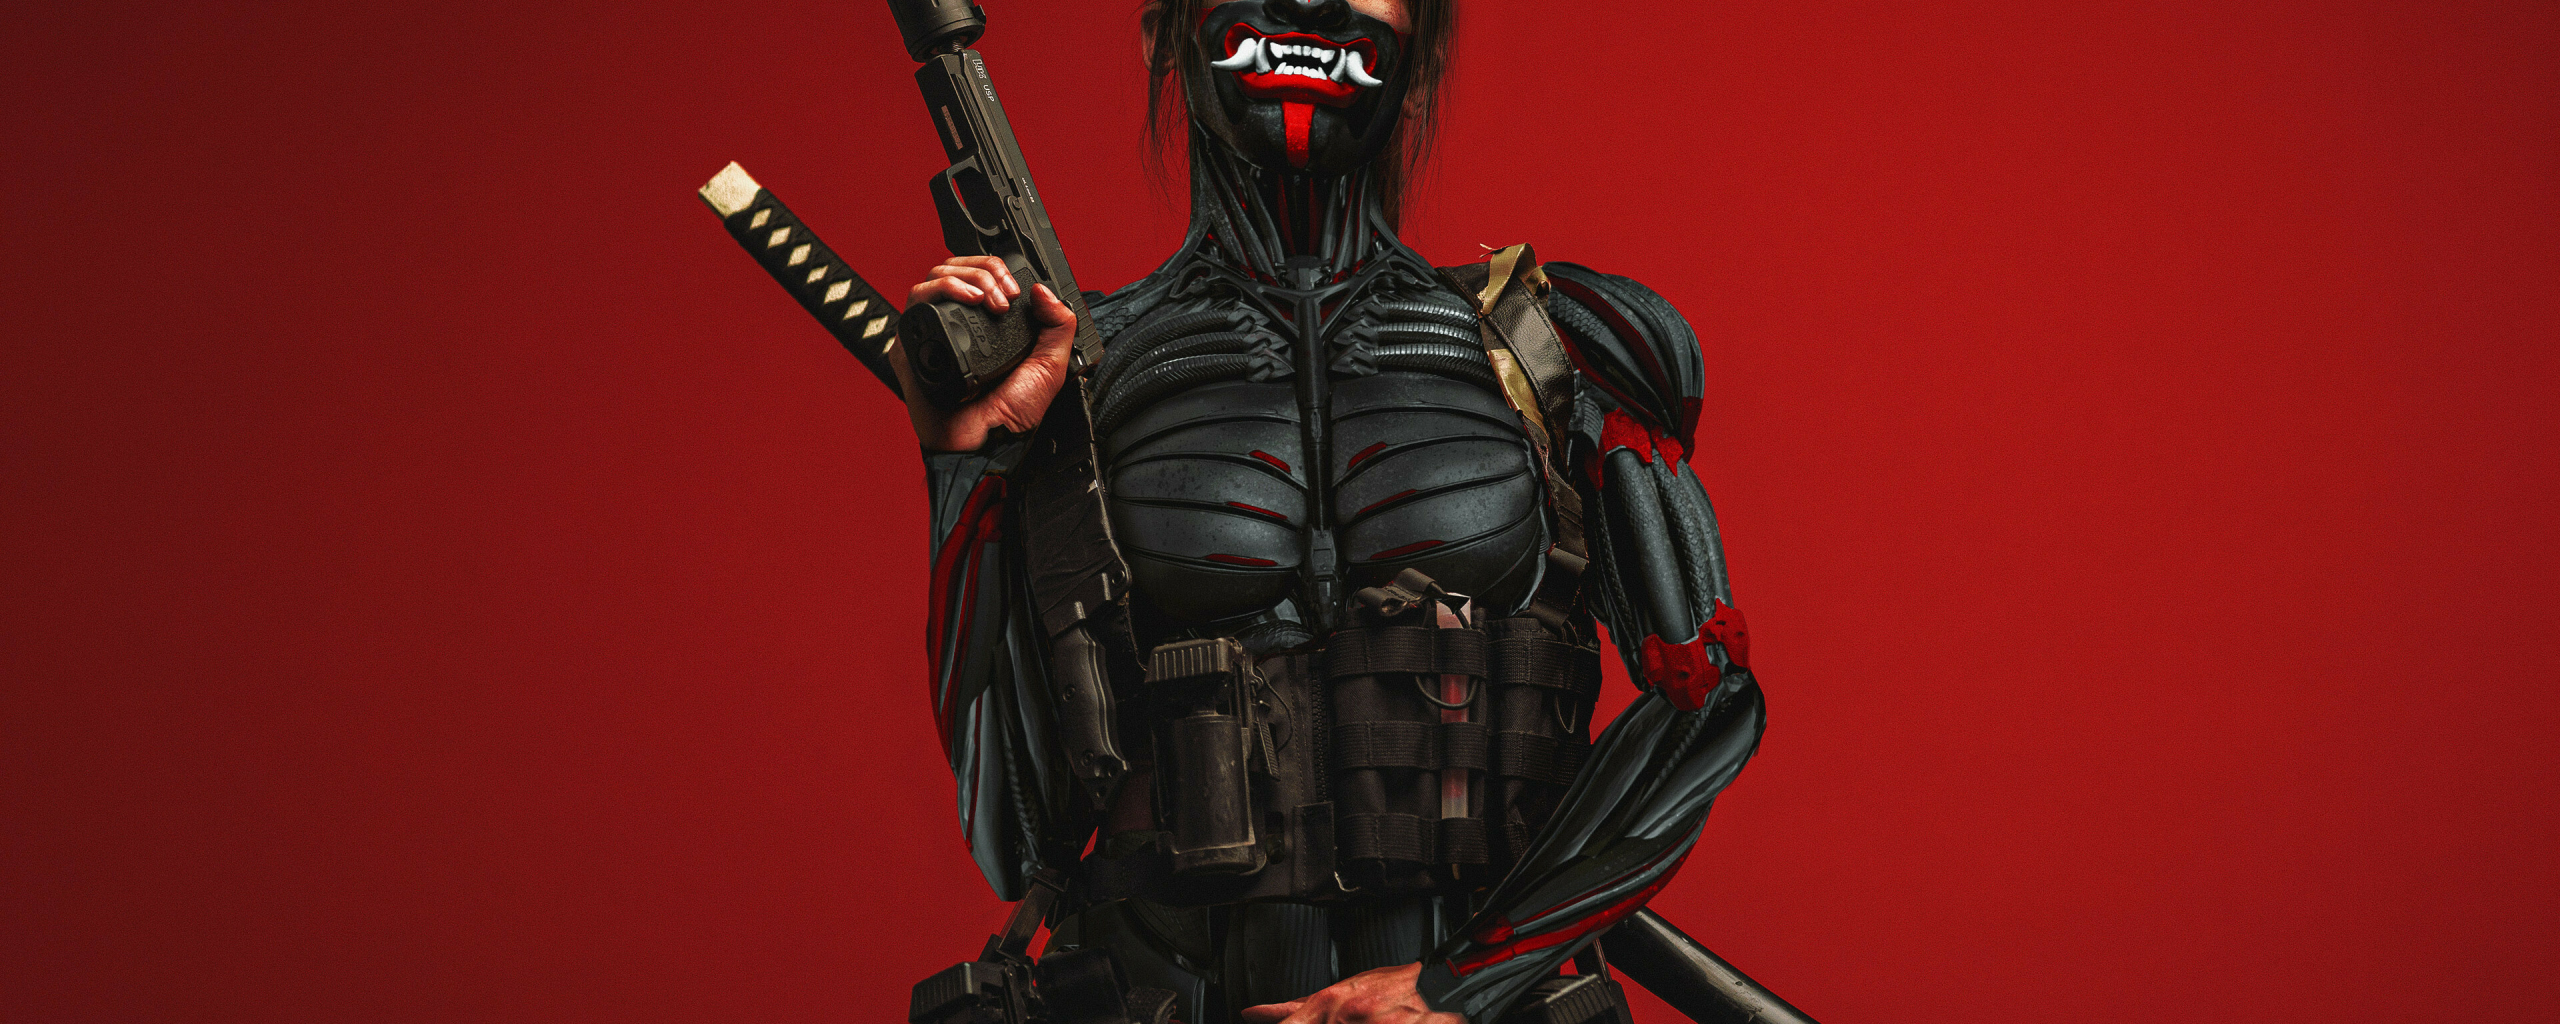 Cyberpunk ninja, with katana & gun, art, 2560x1024 wallpaper